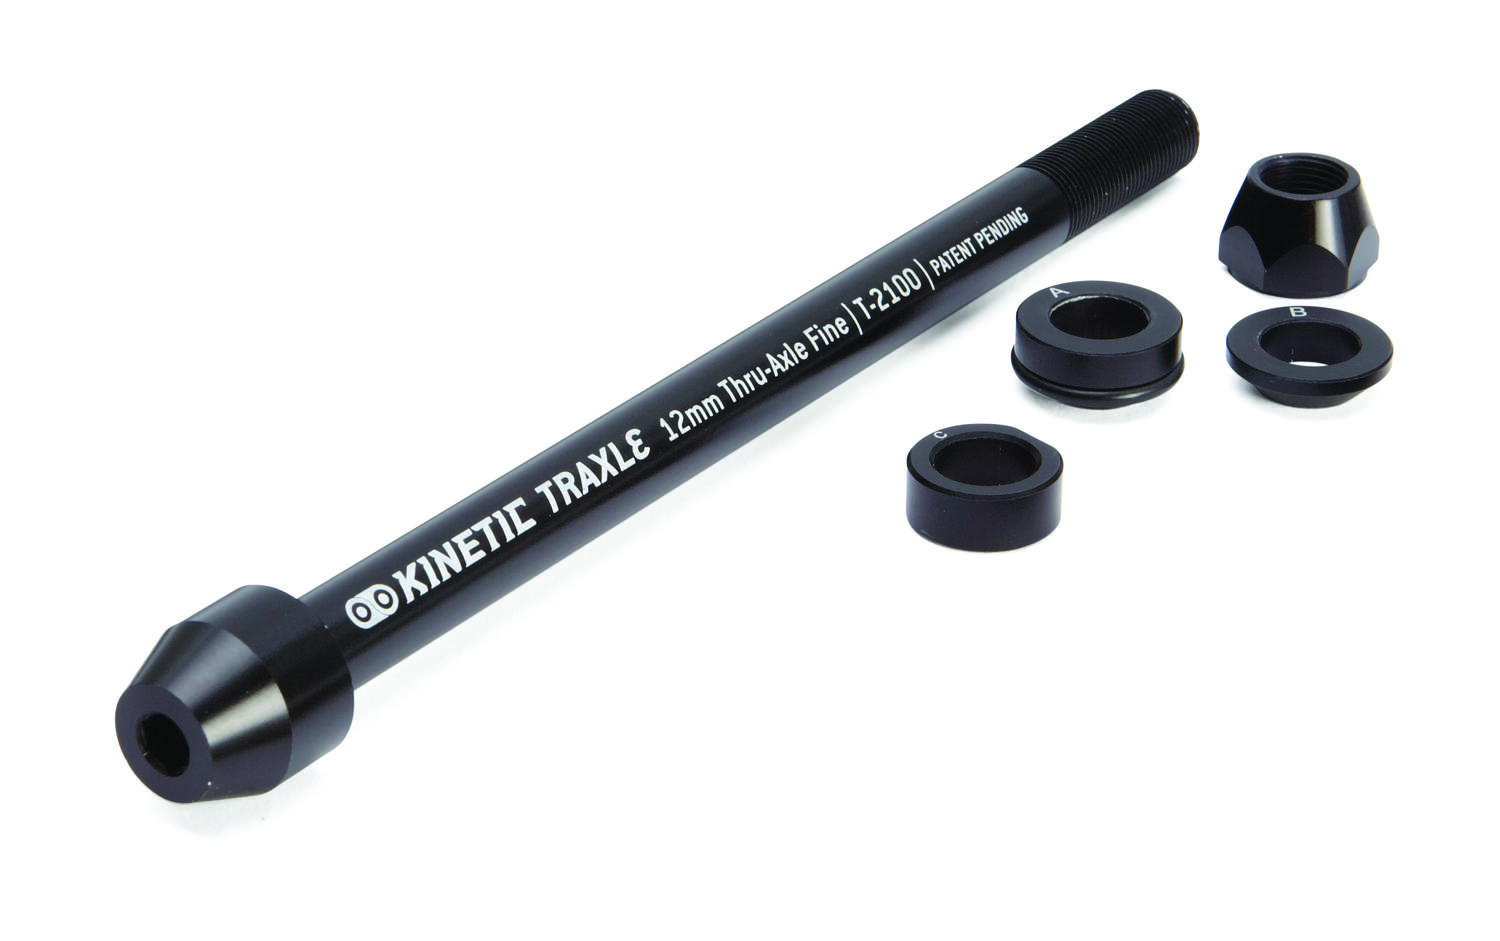 Kinetic Thru-Axle 12mm Traxle Fine